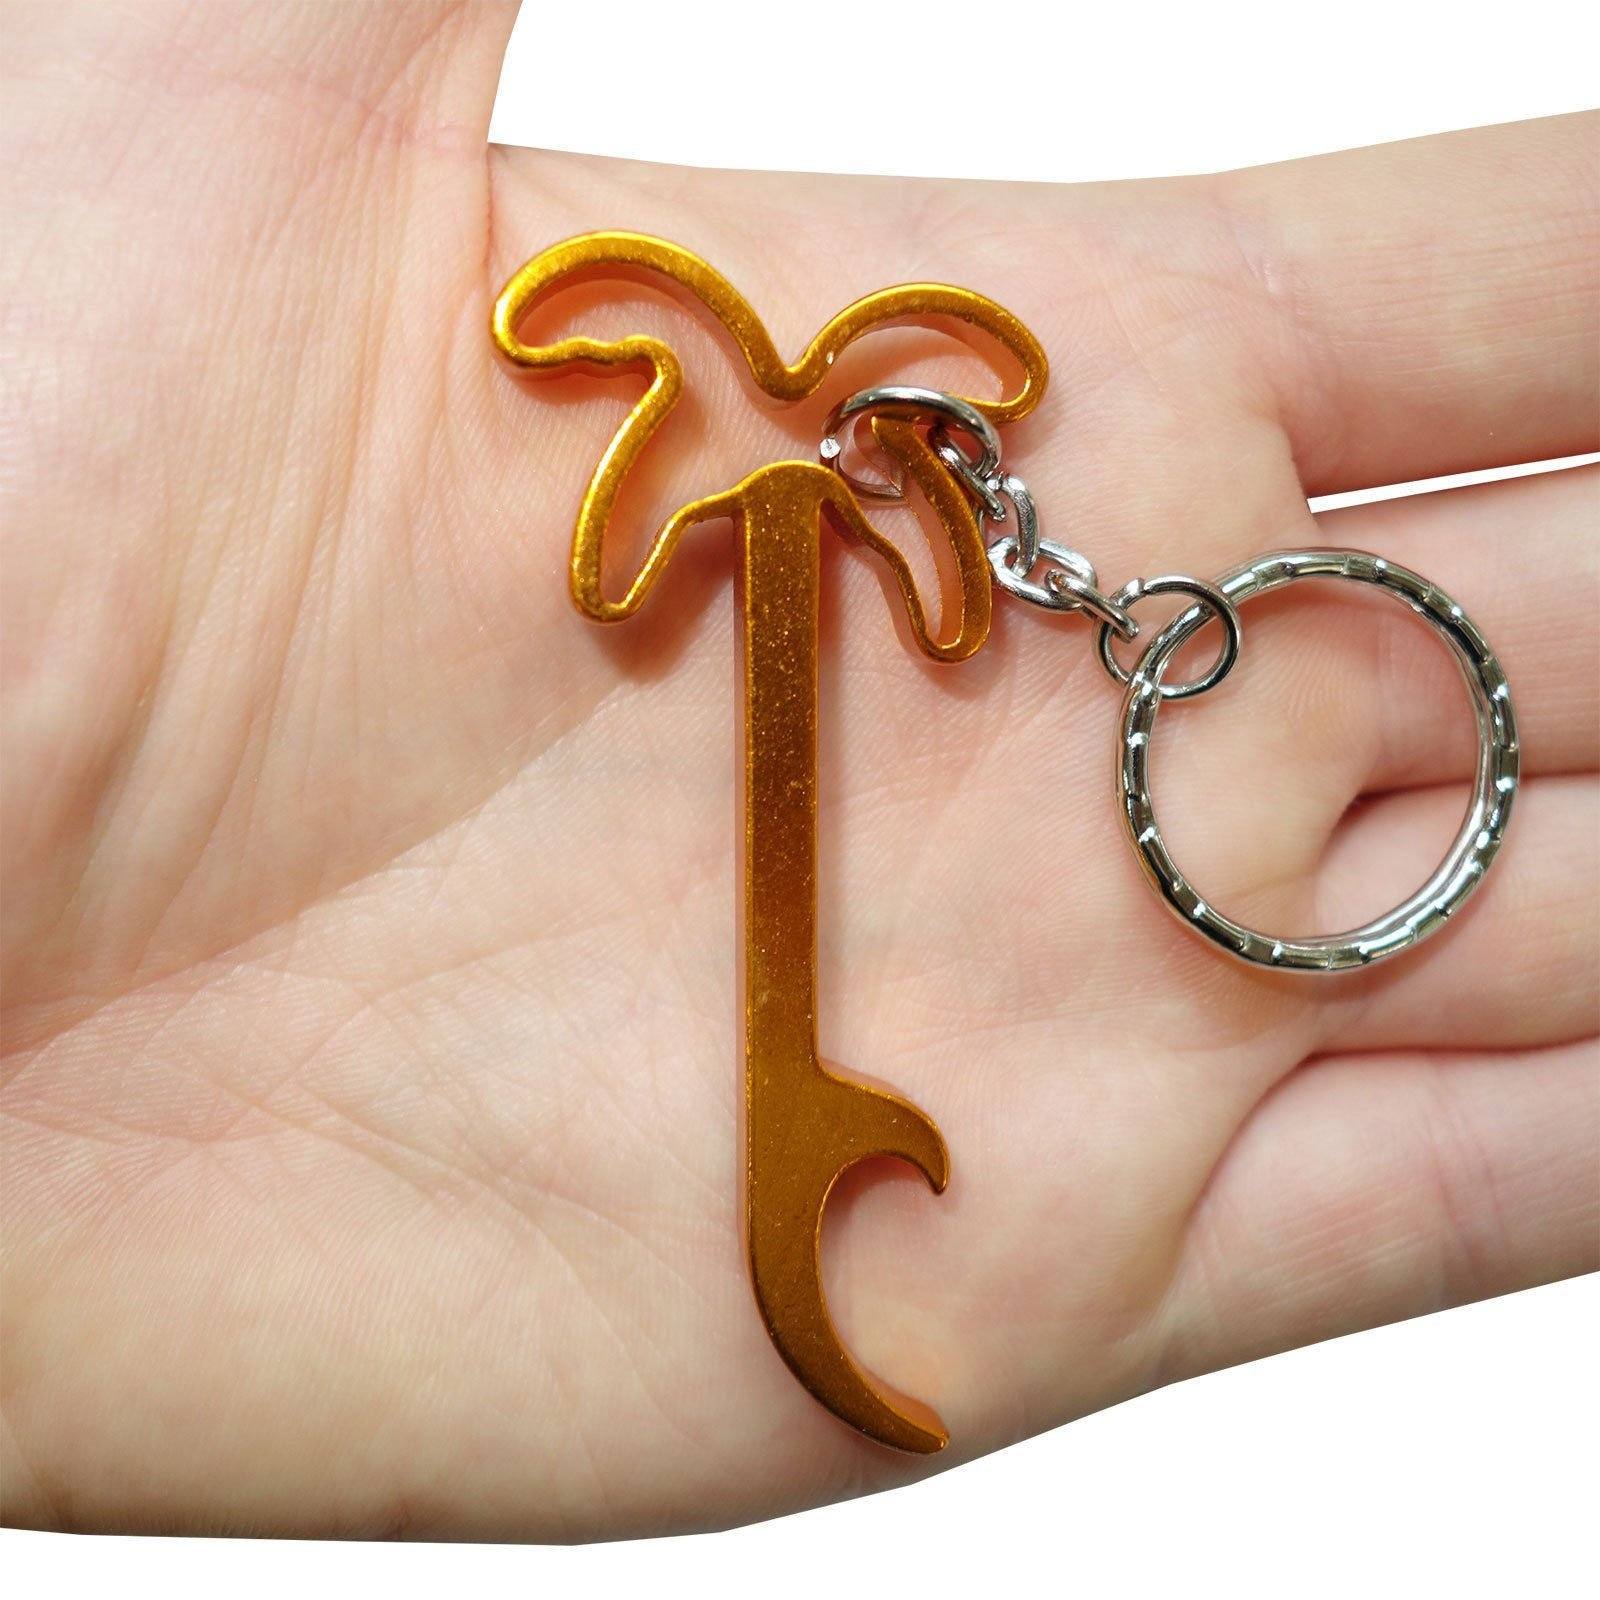 Gold Palm Tree Key Ring Chain Fob Beer Bottle Opener Keyring Keychain Bag Charm